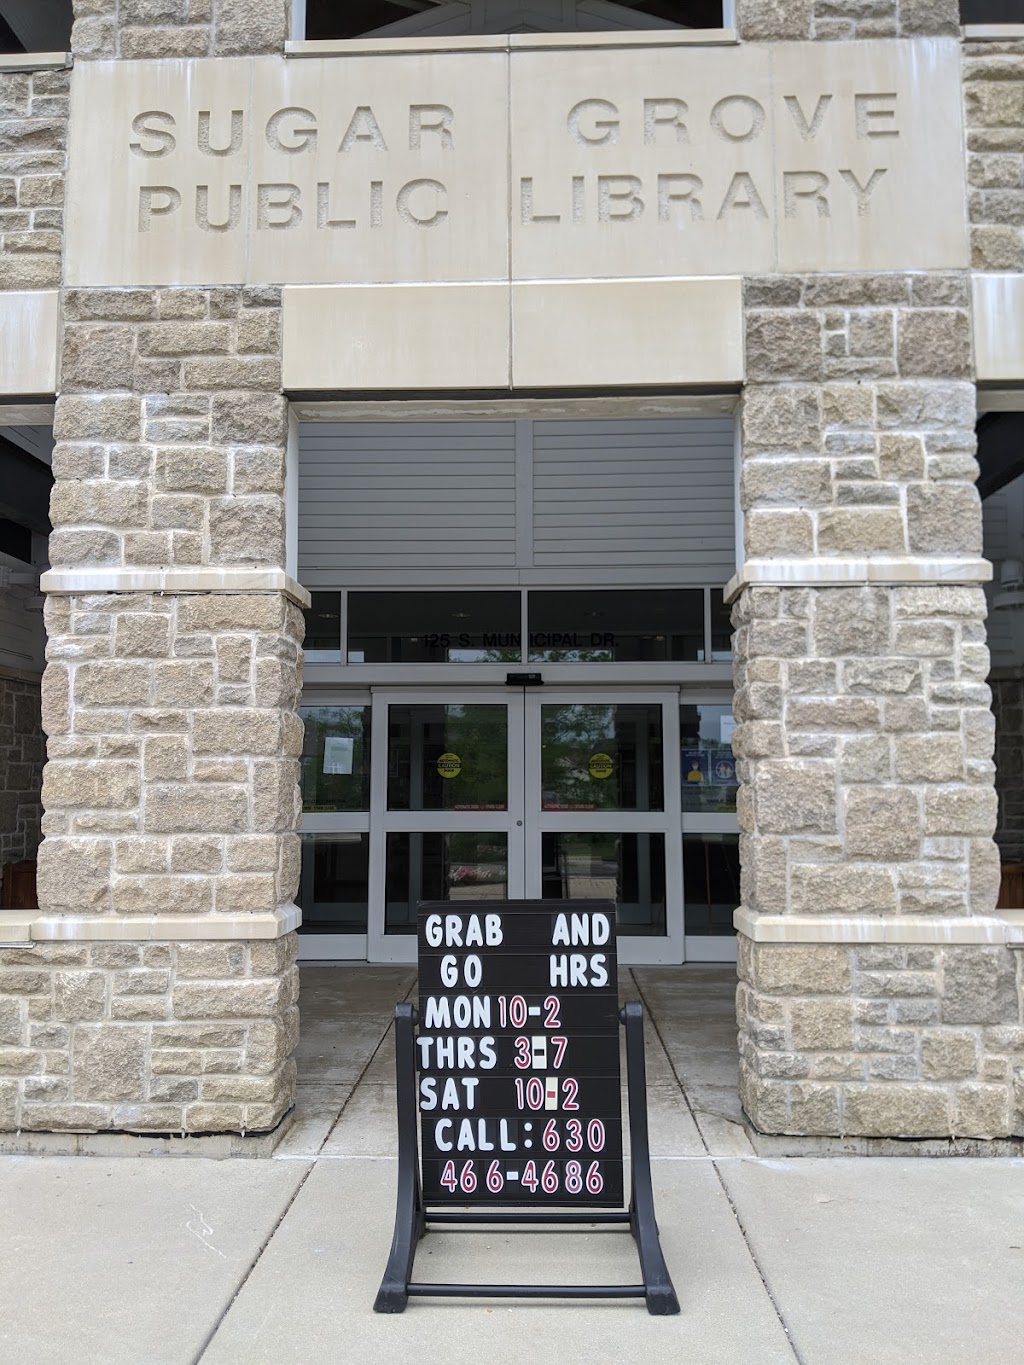 Library Friends Used Bookstore | 125 Municipal Dr, Sugar Grove, IL 60554 | Phone: (630) 466-4686